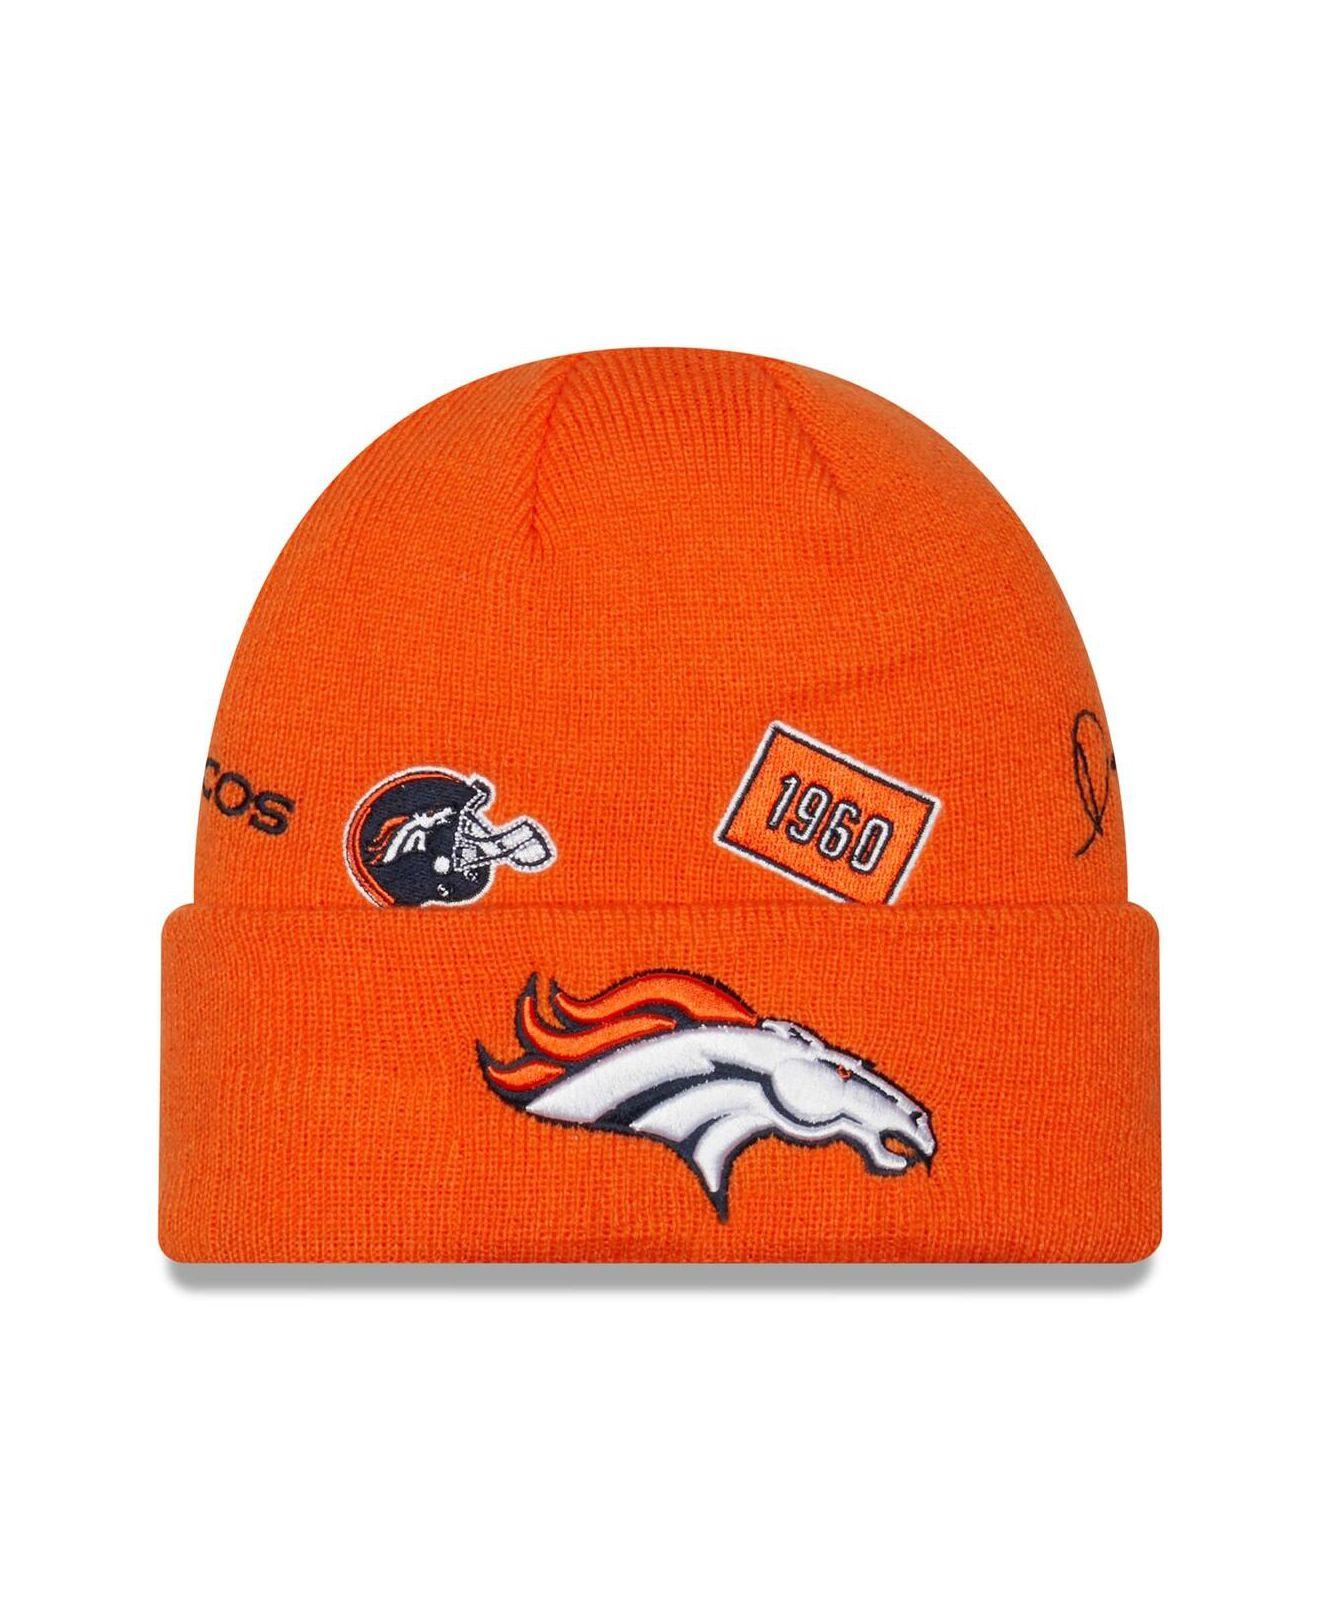 Men's New Era Orange Denver Broncos Tri-Tone 59FIFTY Fitted Hat